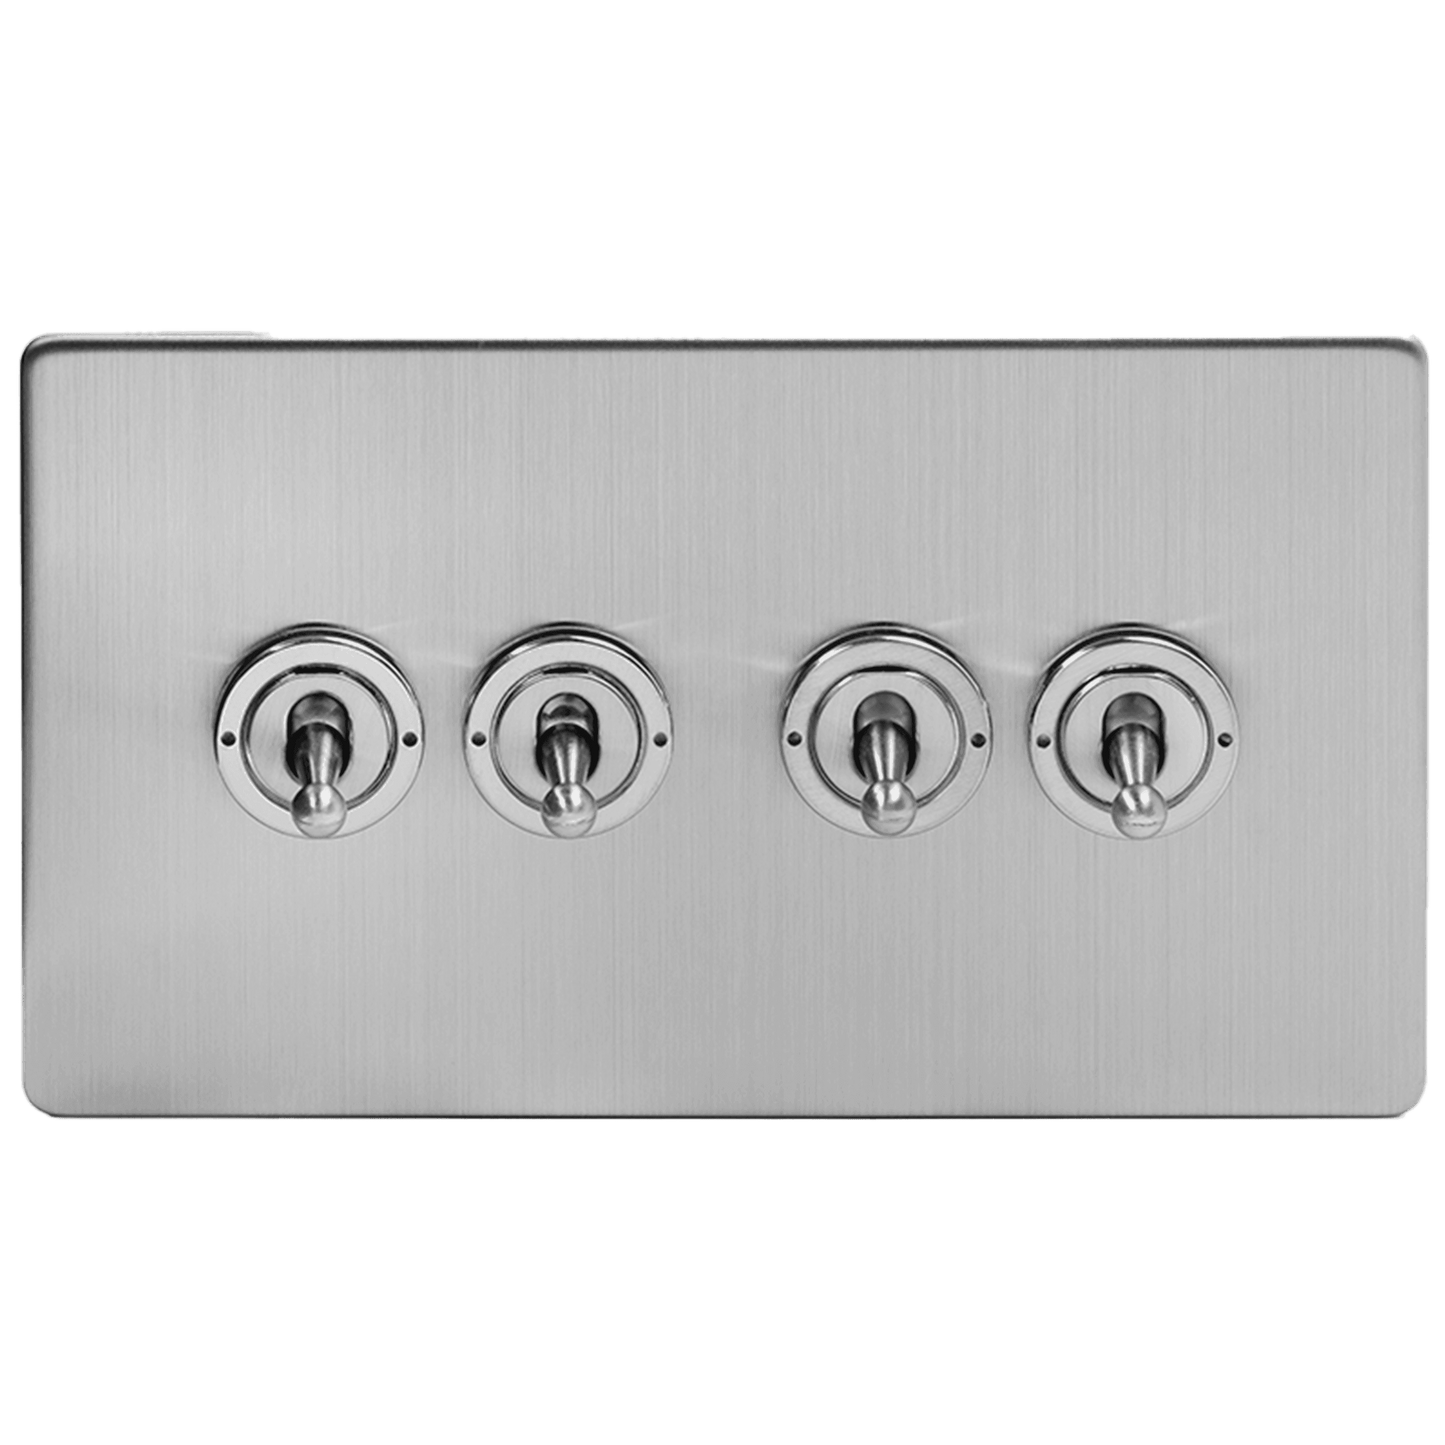 Brushed Chrome 4 Gang Toggle Light Switch - Bilden Home & Hardware Market